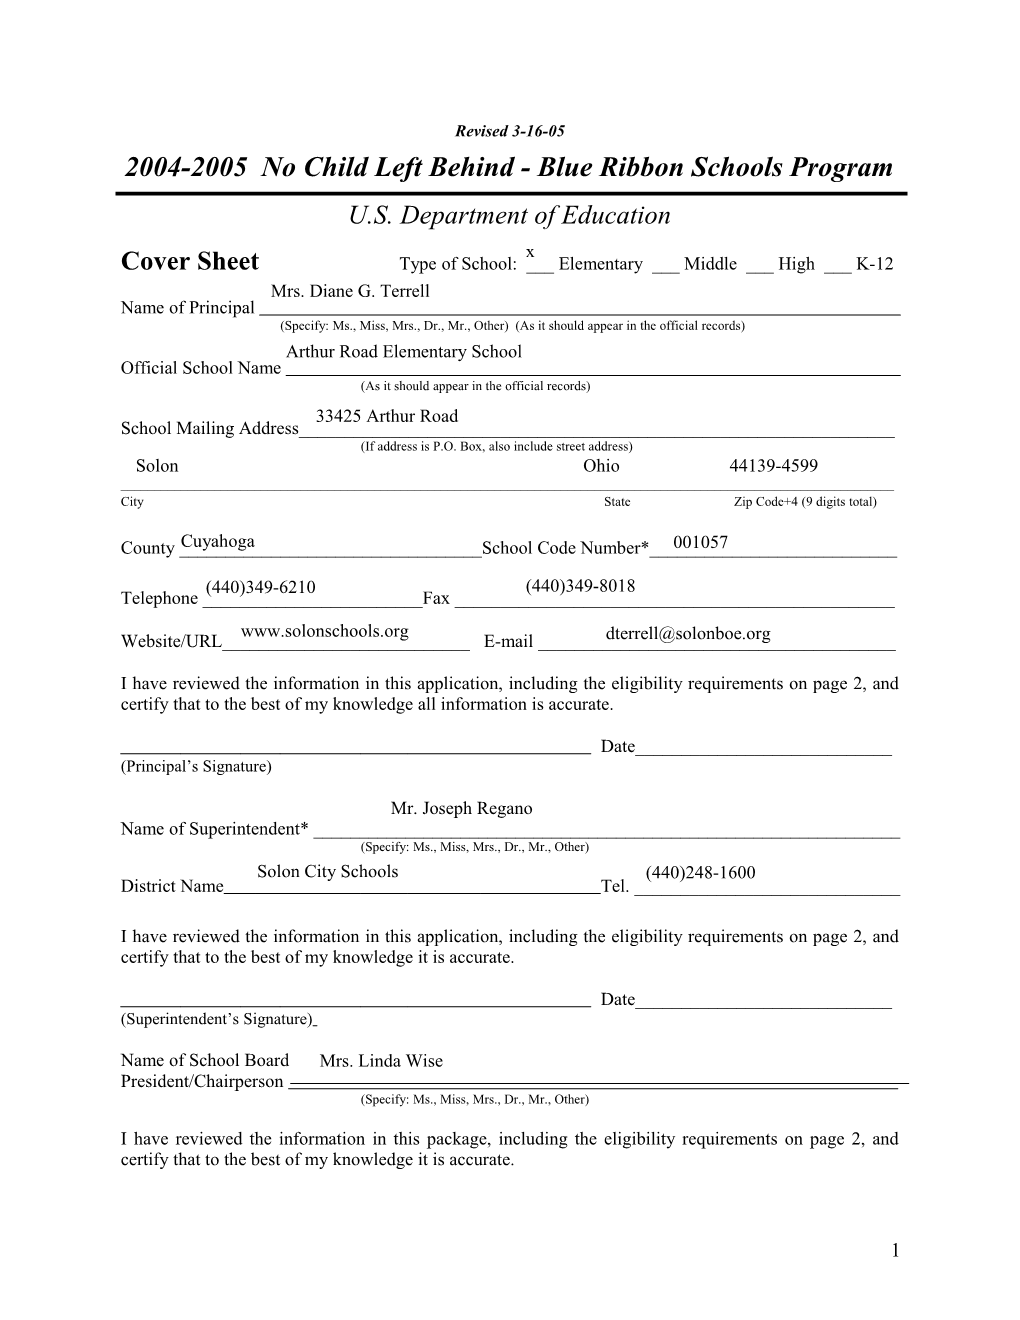 Arthur Road Elementary School Application: 2004-2005, No Child Left Behind - Blue Ribbon